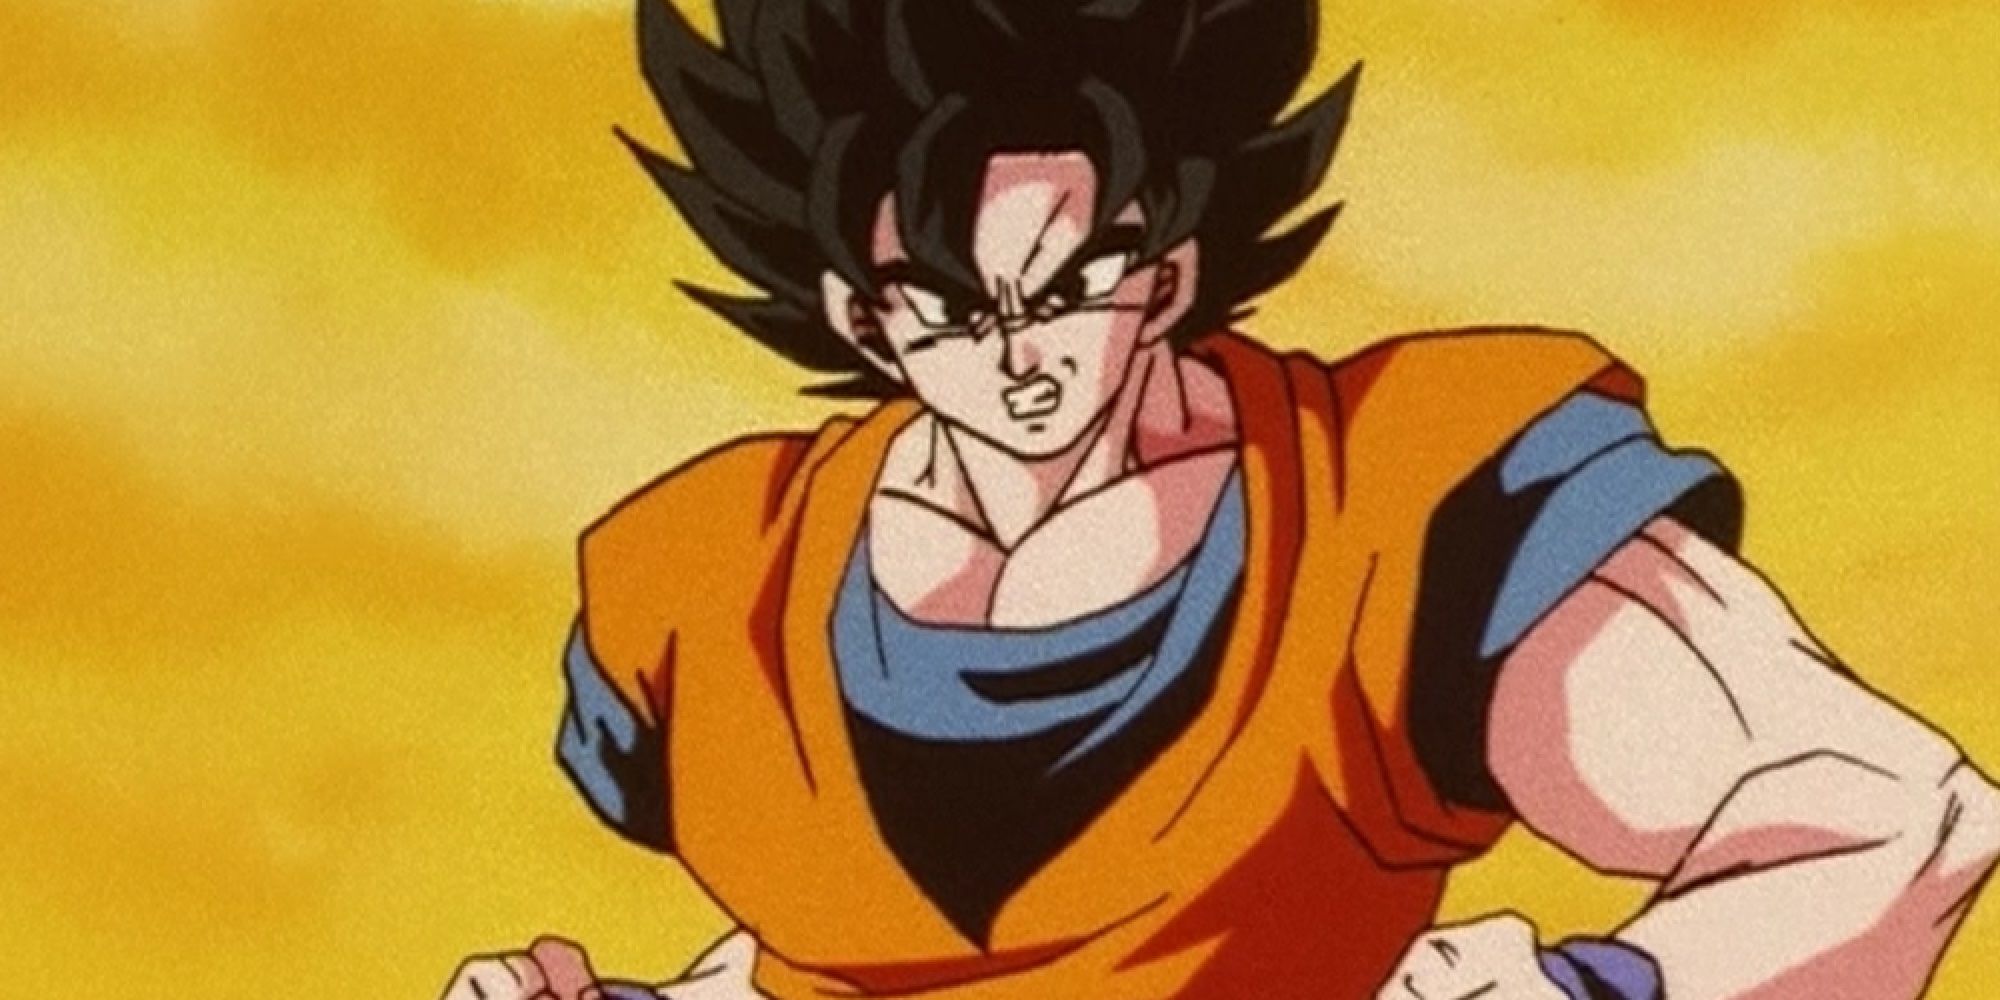 Goku's Black Haired Super Saiyan Form from DBZ Episode 195